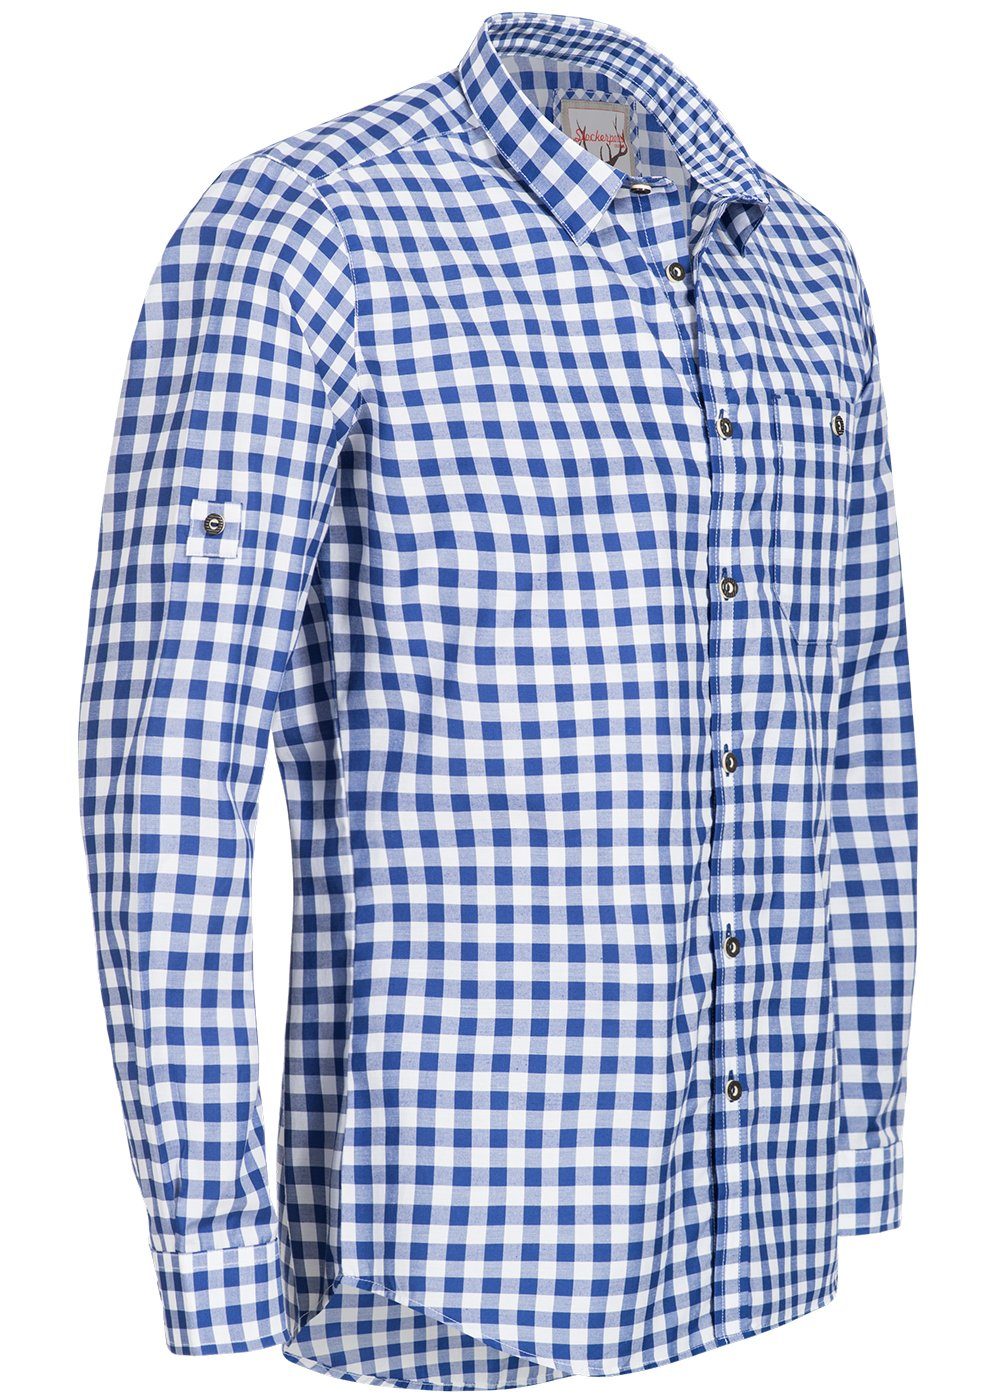 Stockerpoint Trachtenhemd Trachtenhemd OC-Franzl, Blau kariert, Fit modern